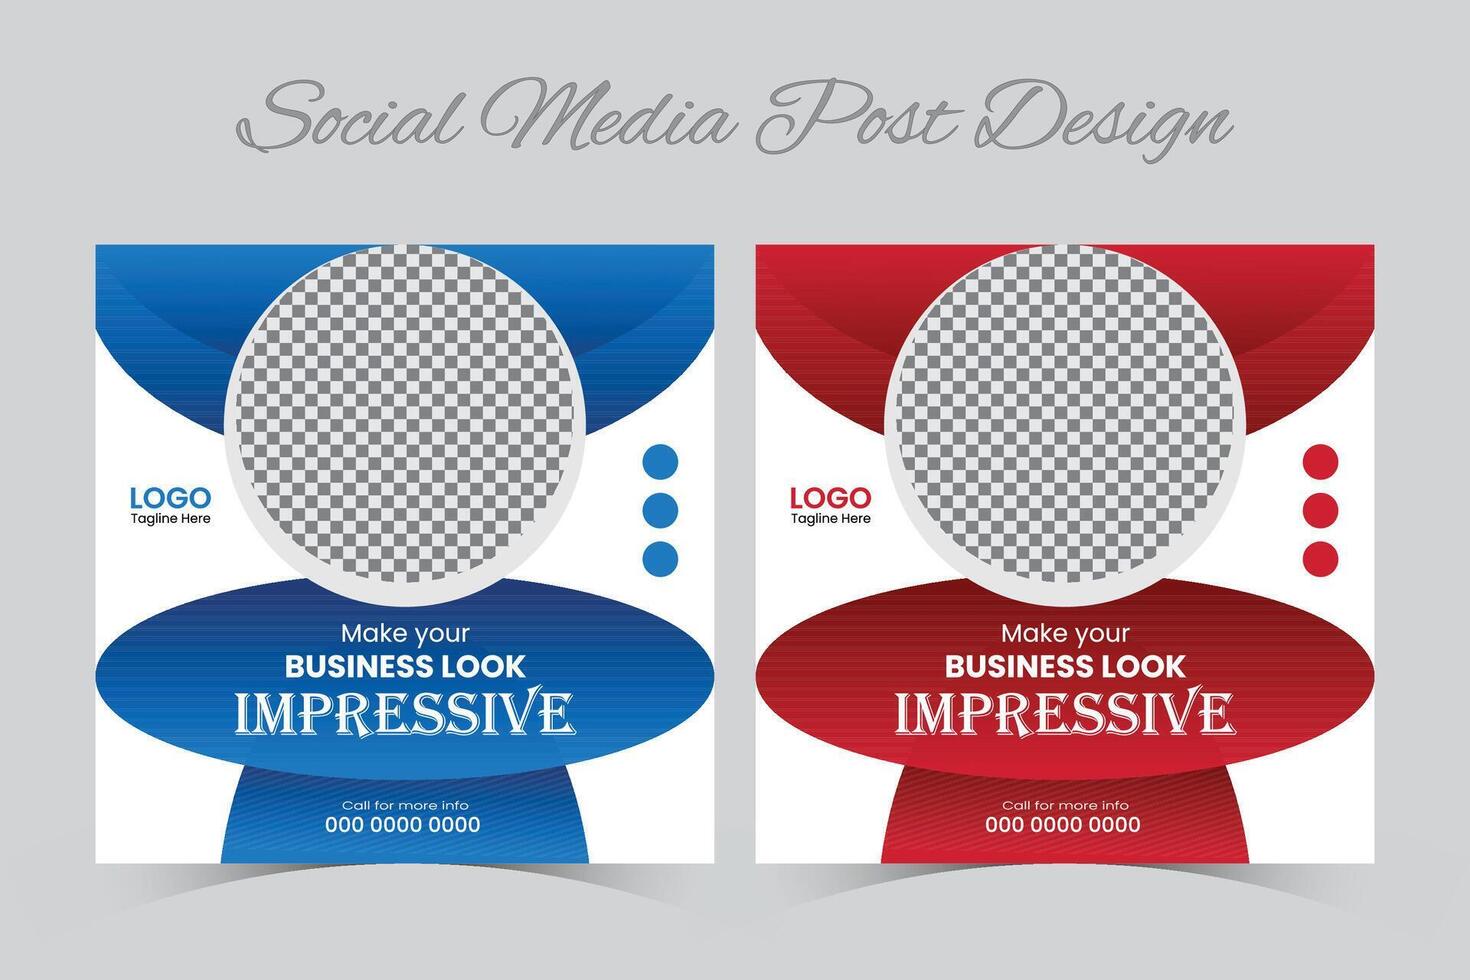 social media post ontwerp vector